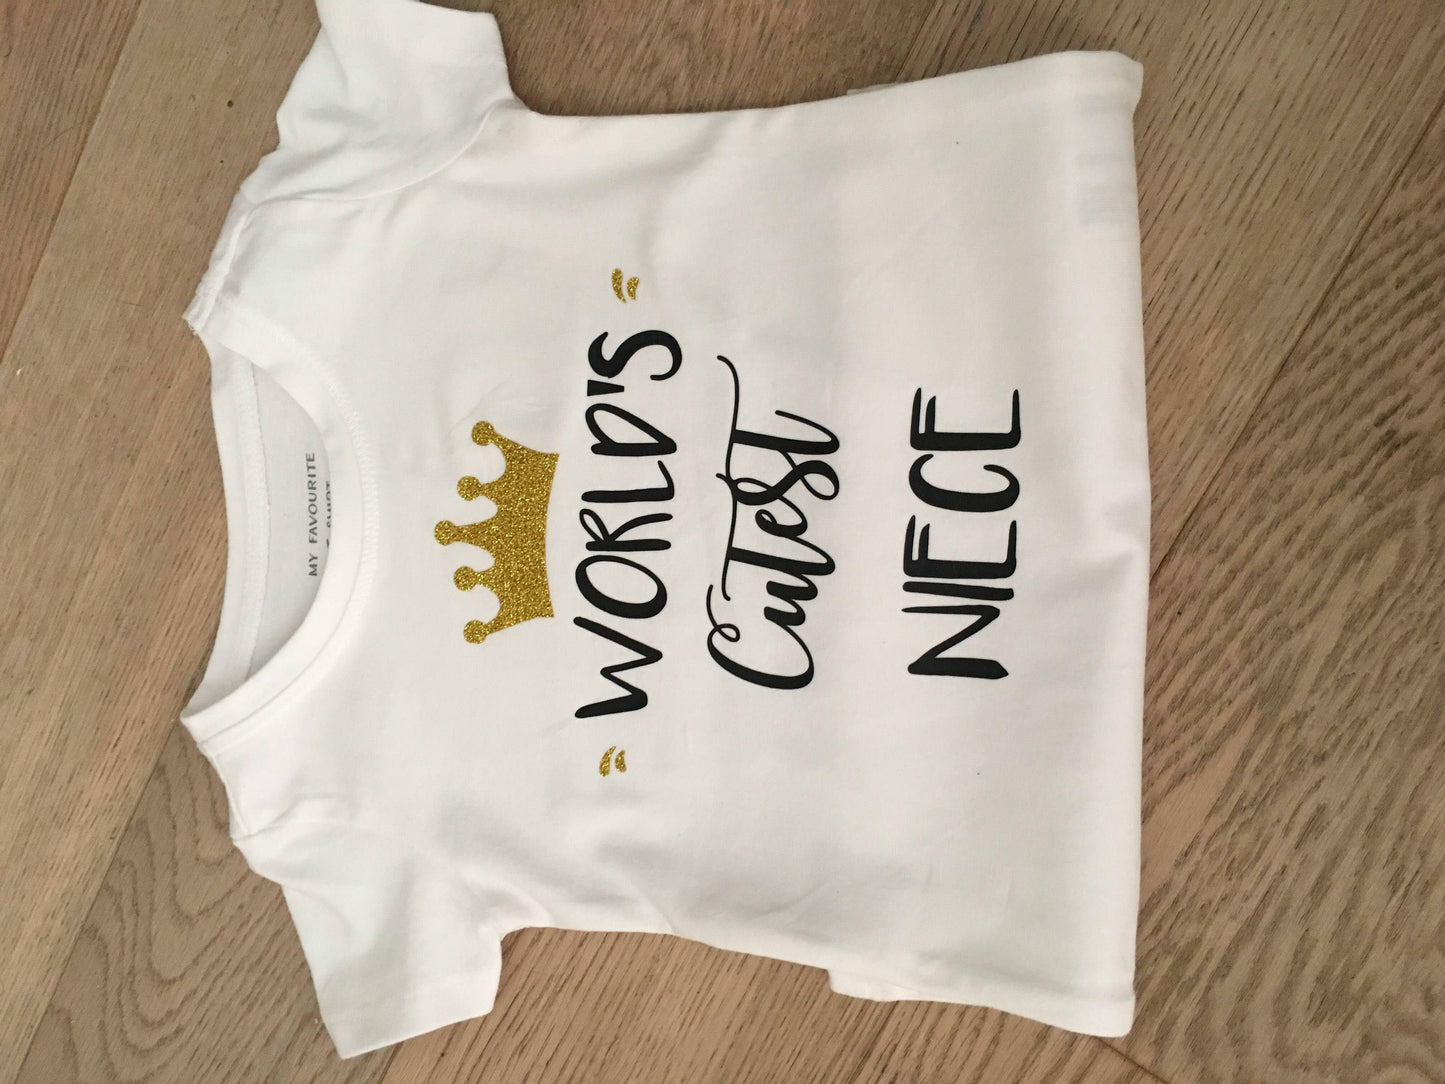 World's cutest niece t-shirt - Unique Tasbihs & Gifts